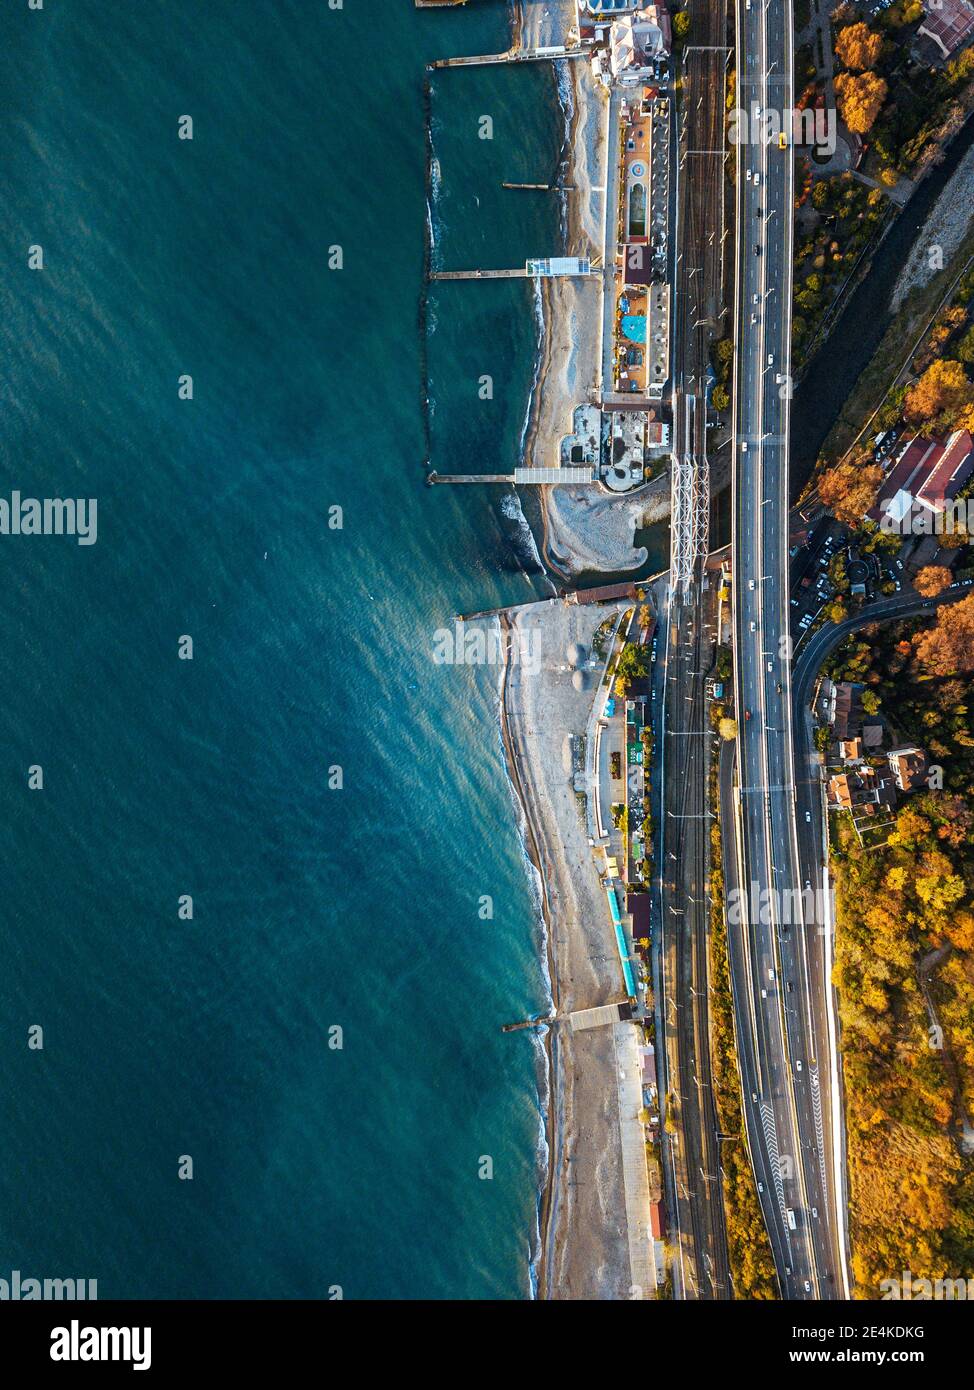 Russia, Krasnodar Krai, Sochi, Vista aerea del traffico su autostrada costiera Foto Stock